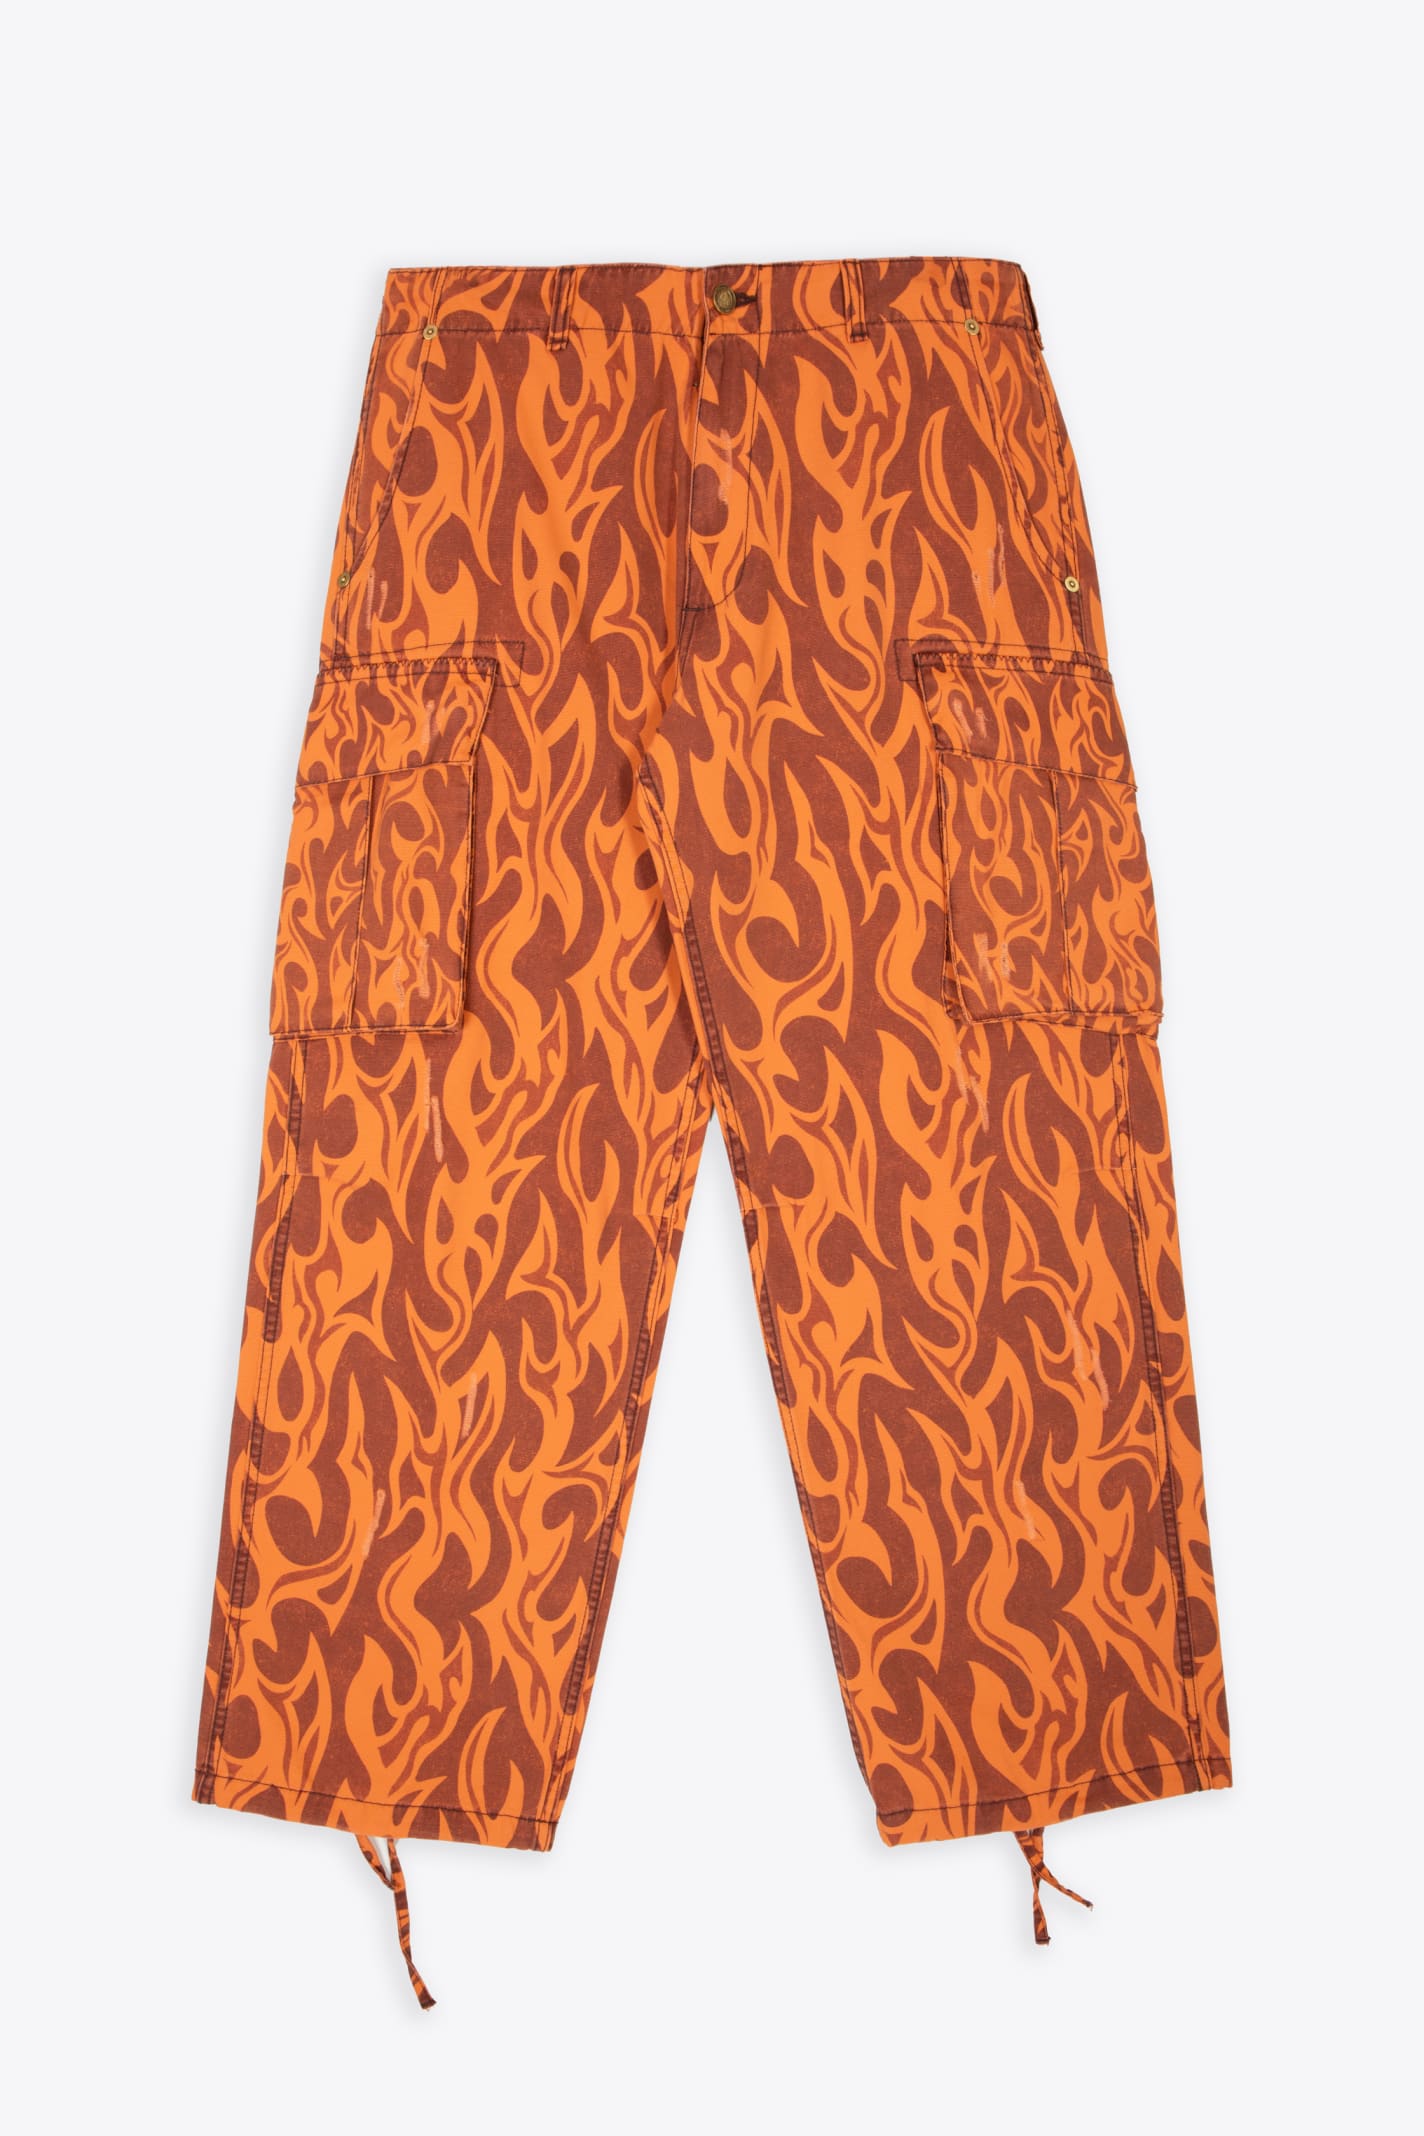 Shop Erl Unisex Printed Cargo Pants Woven Orange Canvas Printed Cargo Pant - Unisex Printed Cargo Pants Woven In Arancio